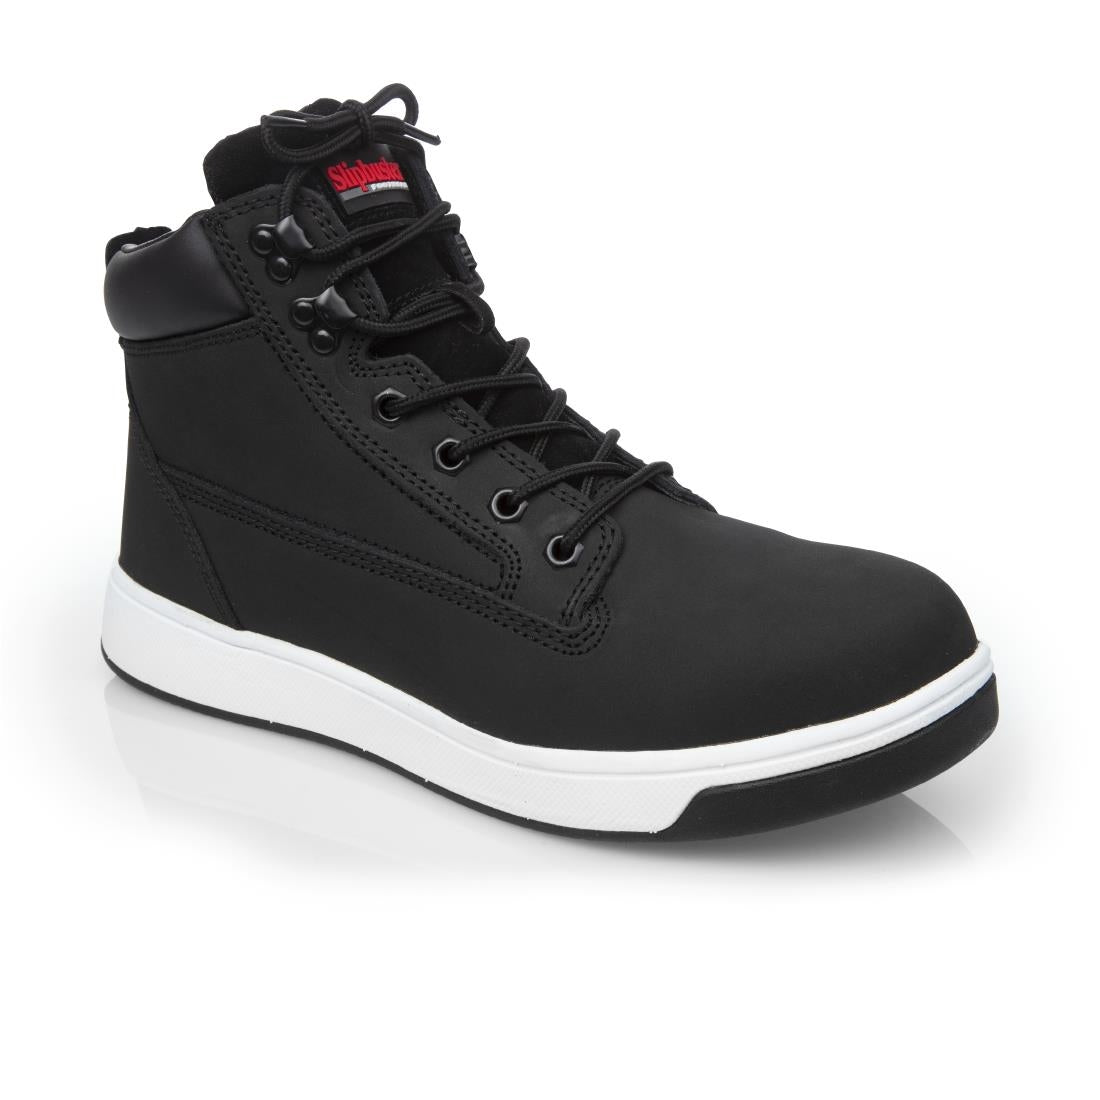 BB422-39 Slipbuster Sneaker Boots Black 39 JD Catering Equipment Solutions Ltd